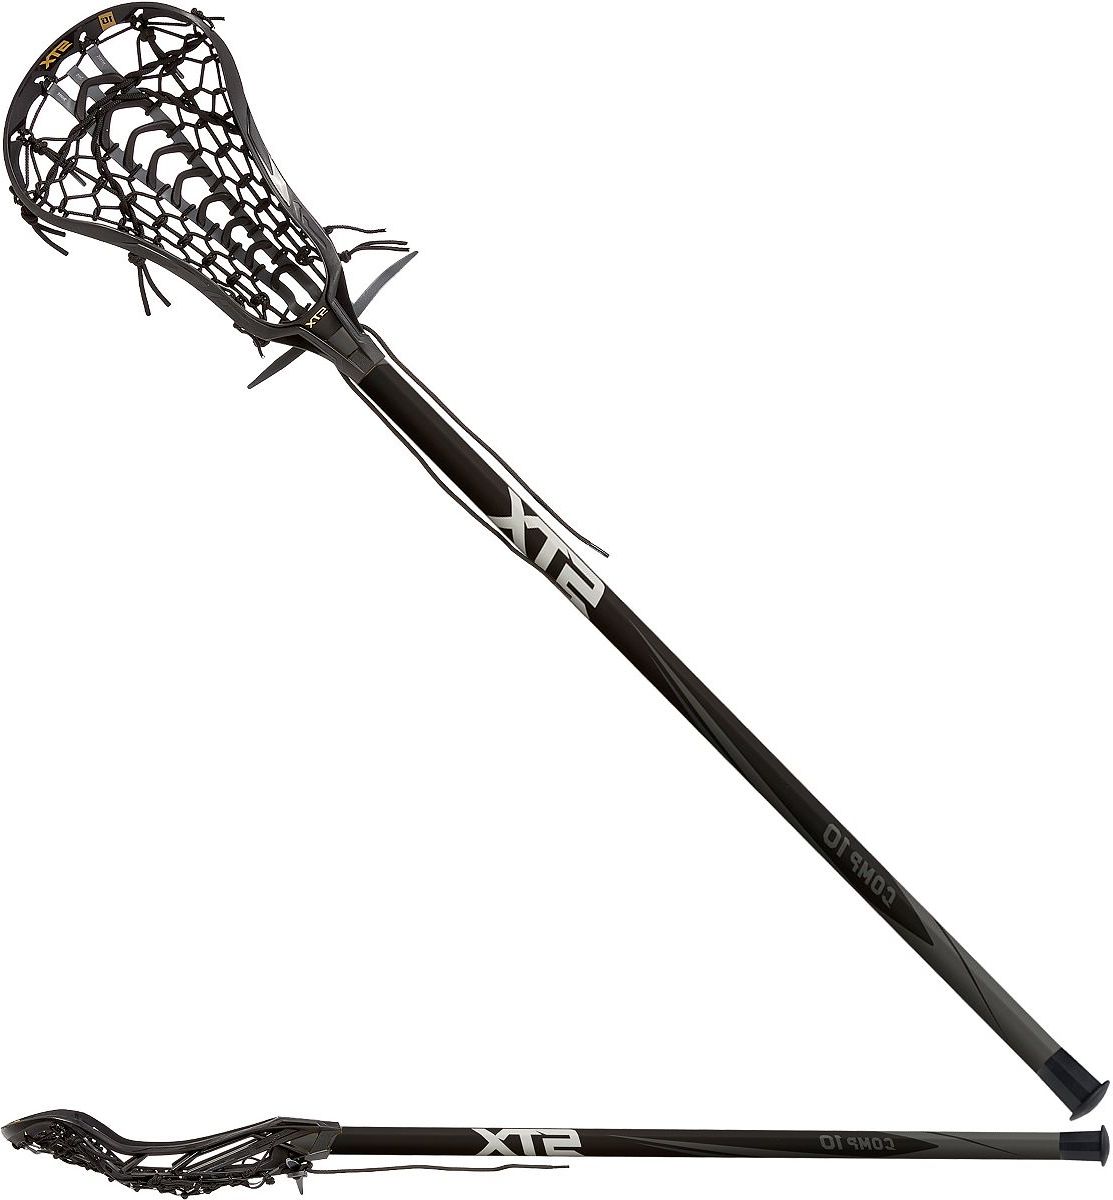 STX Women's Fortress 600 on Composite 10 Complete Lacrosse Stick